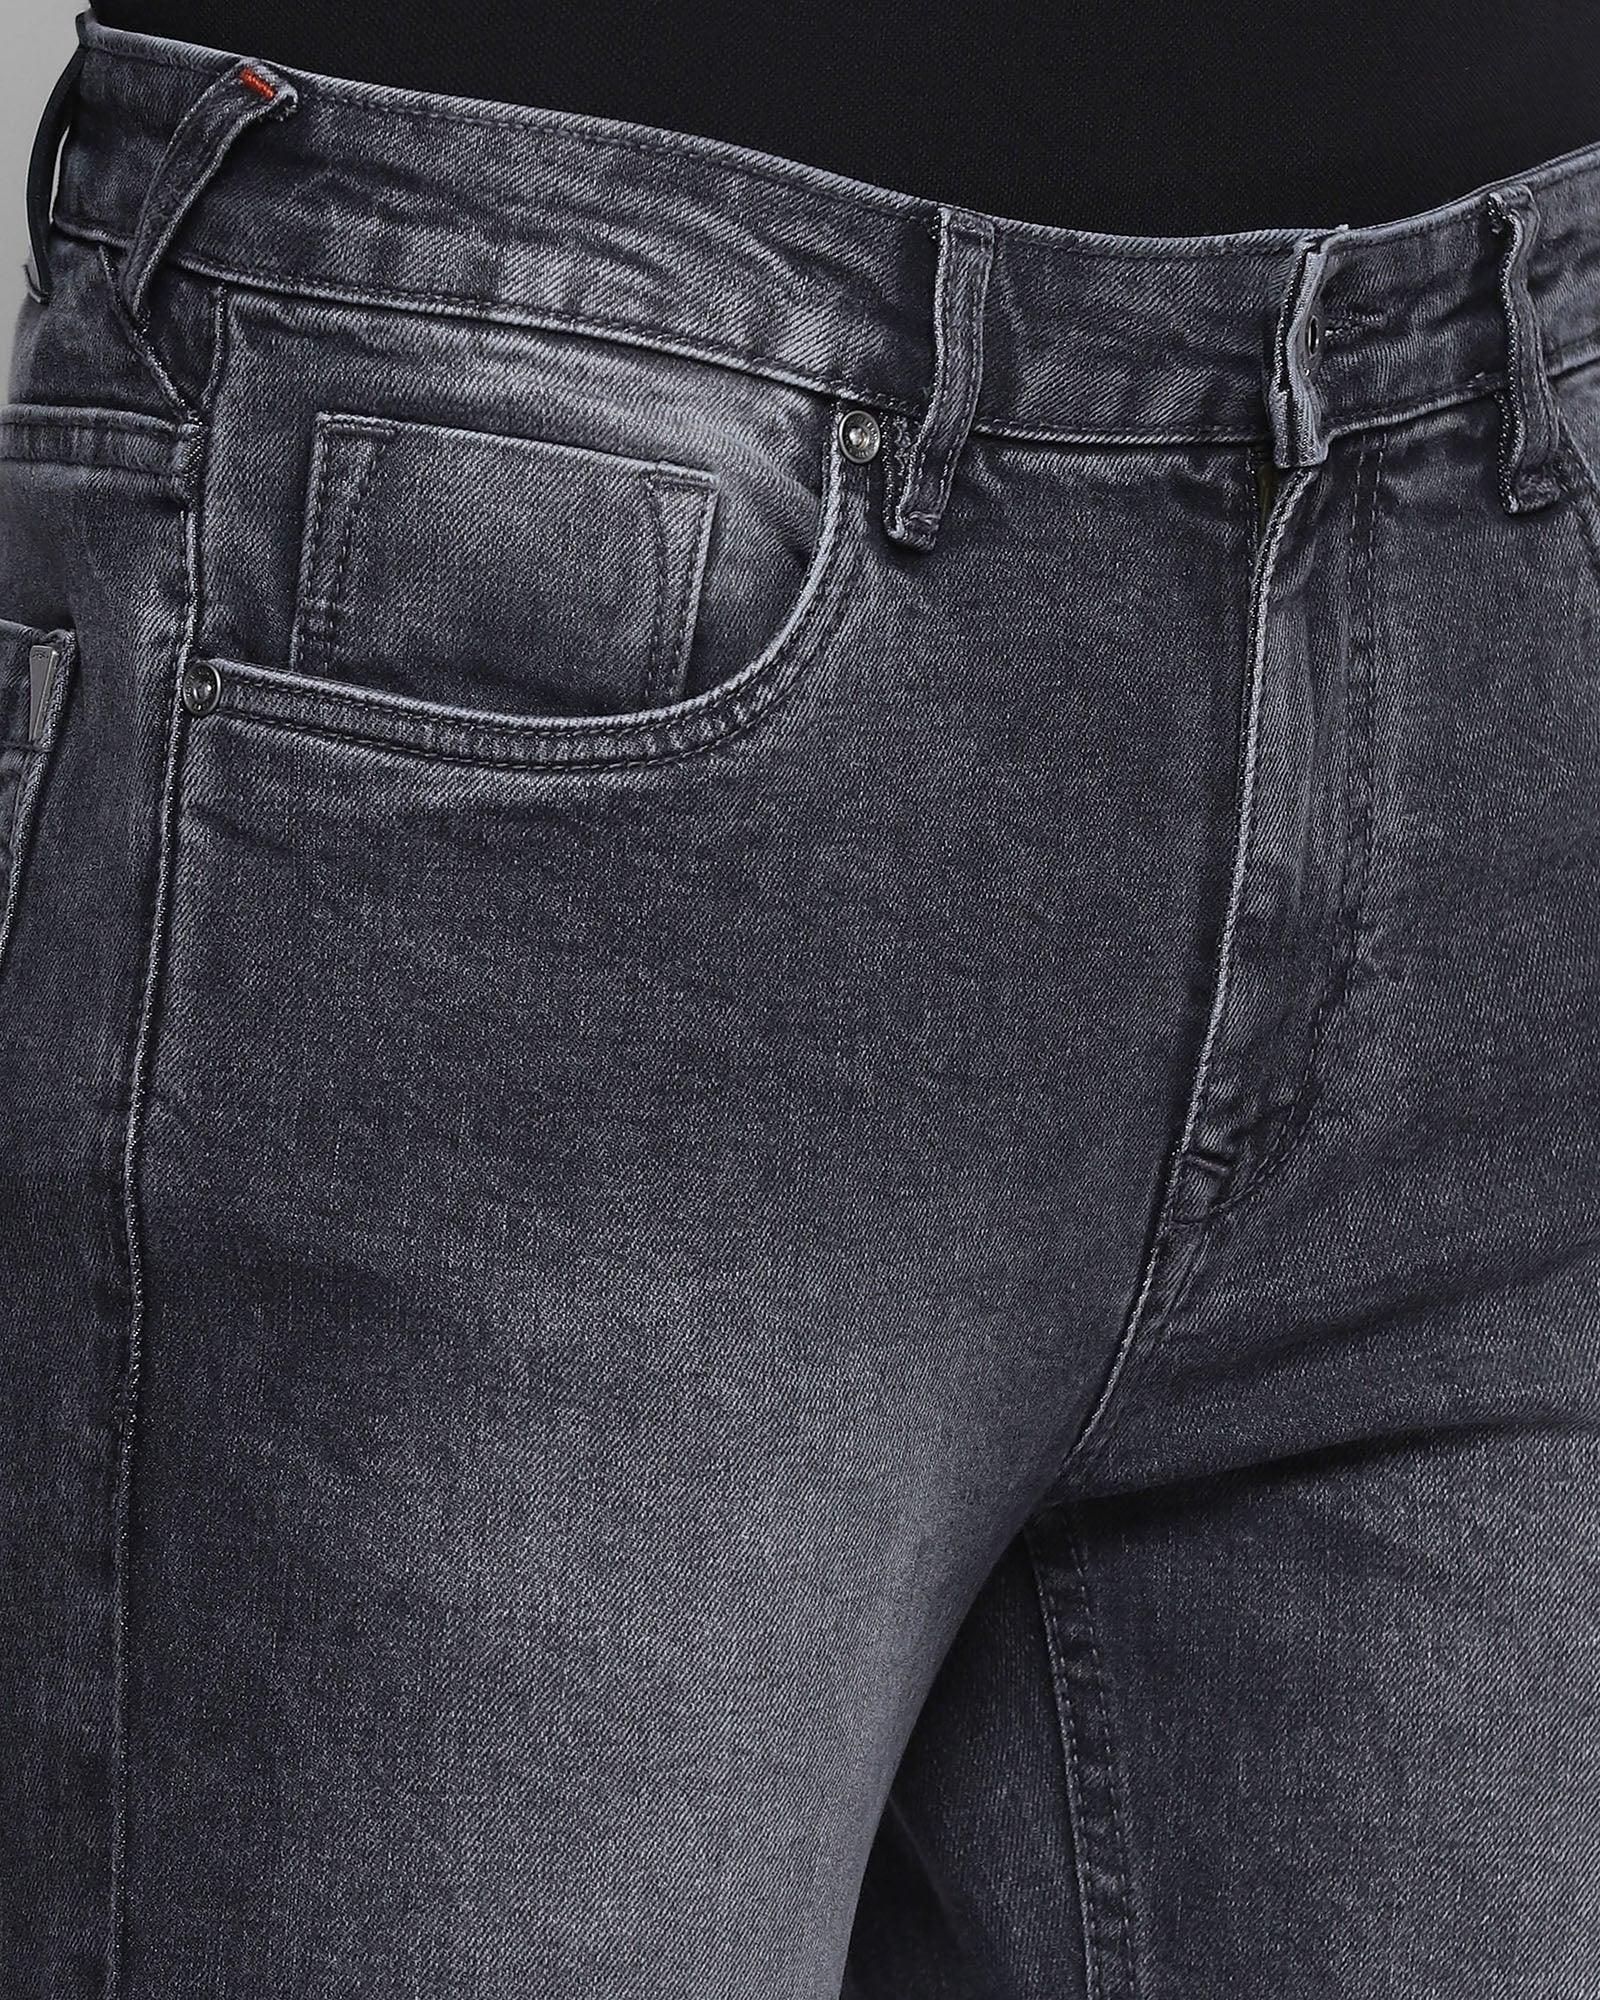 Slim Jeans - Gray - Men | H&M US